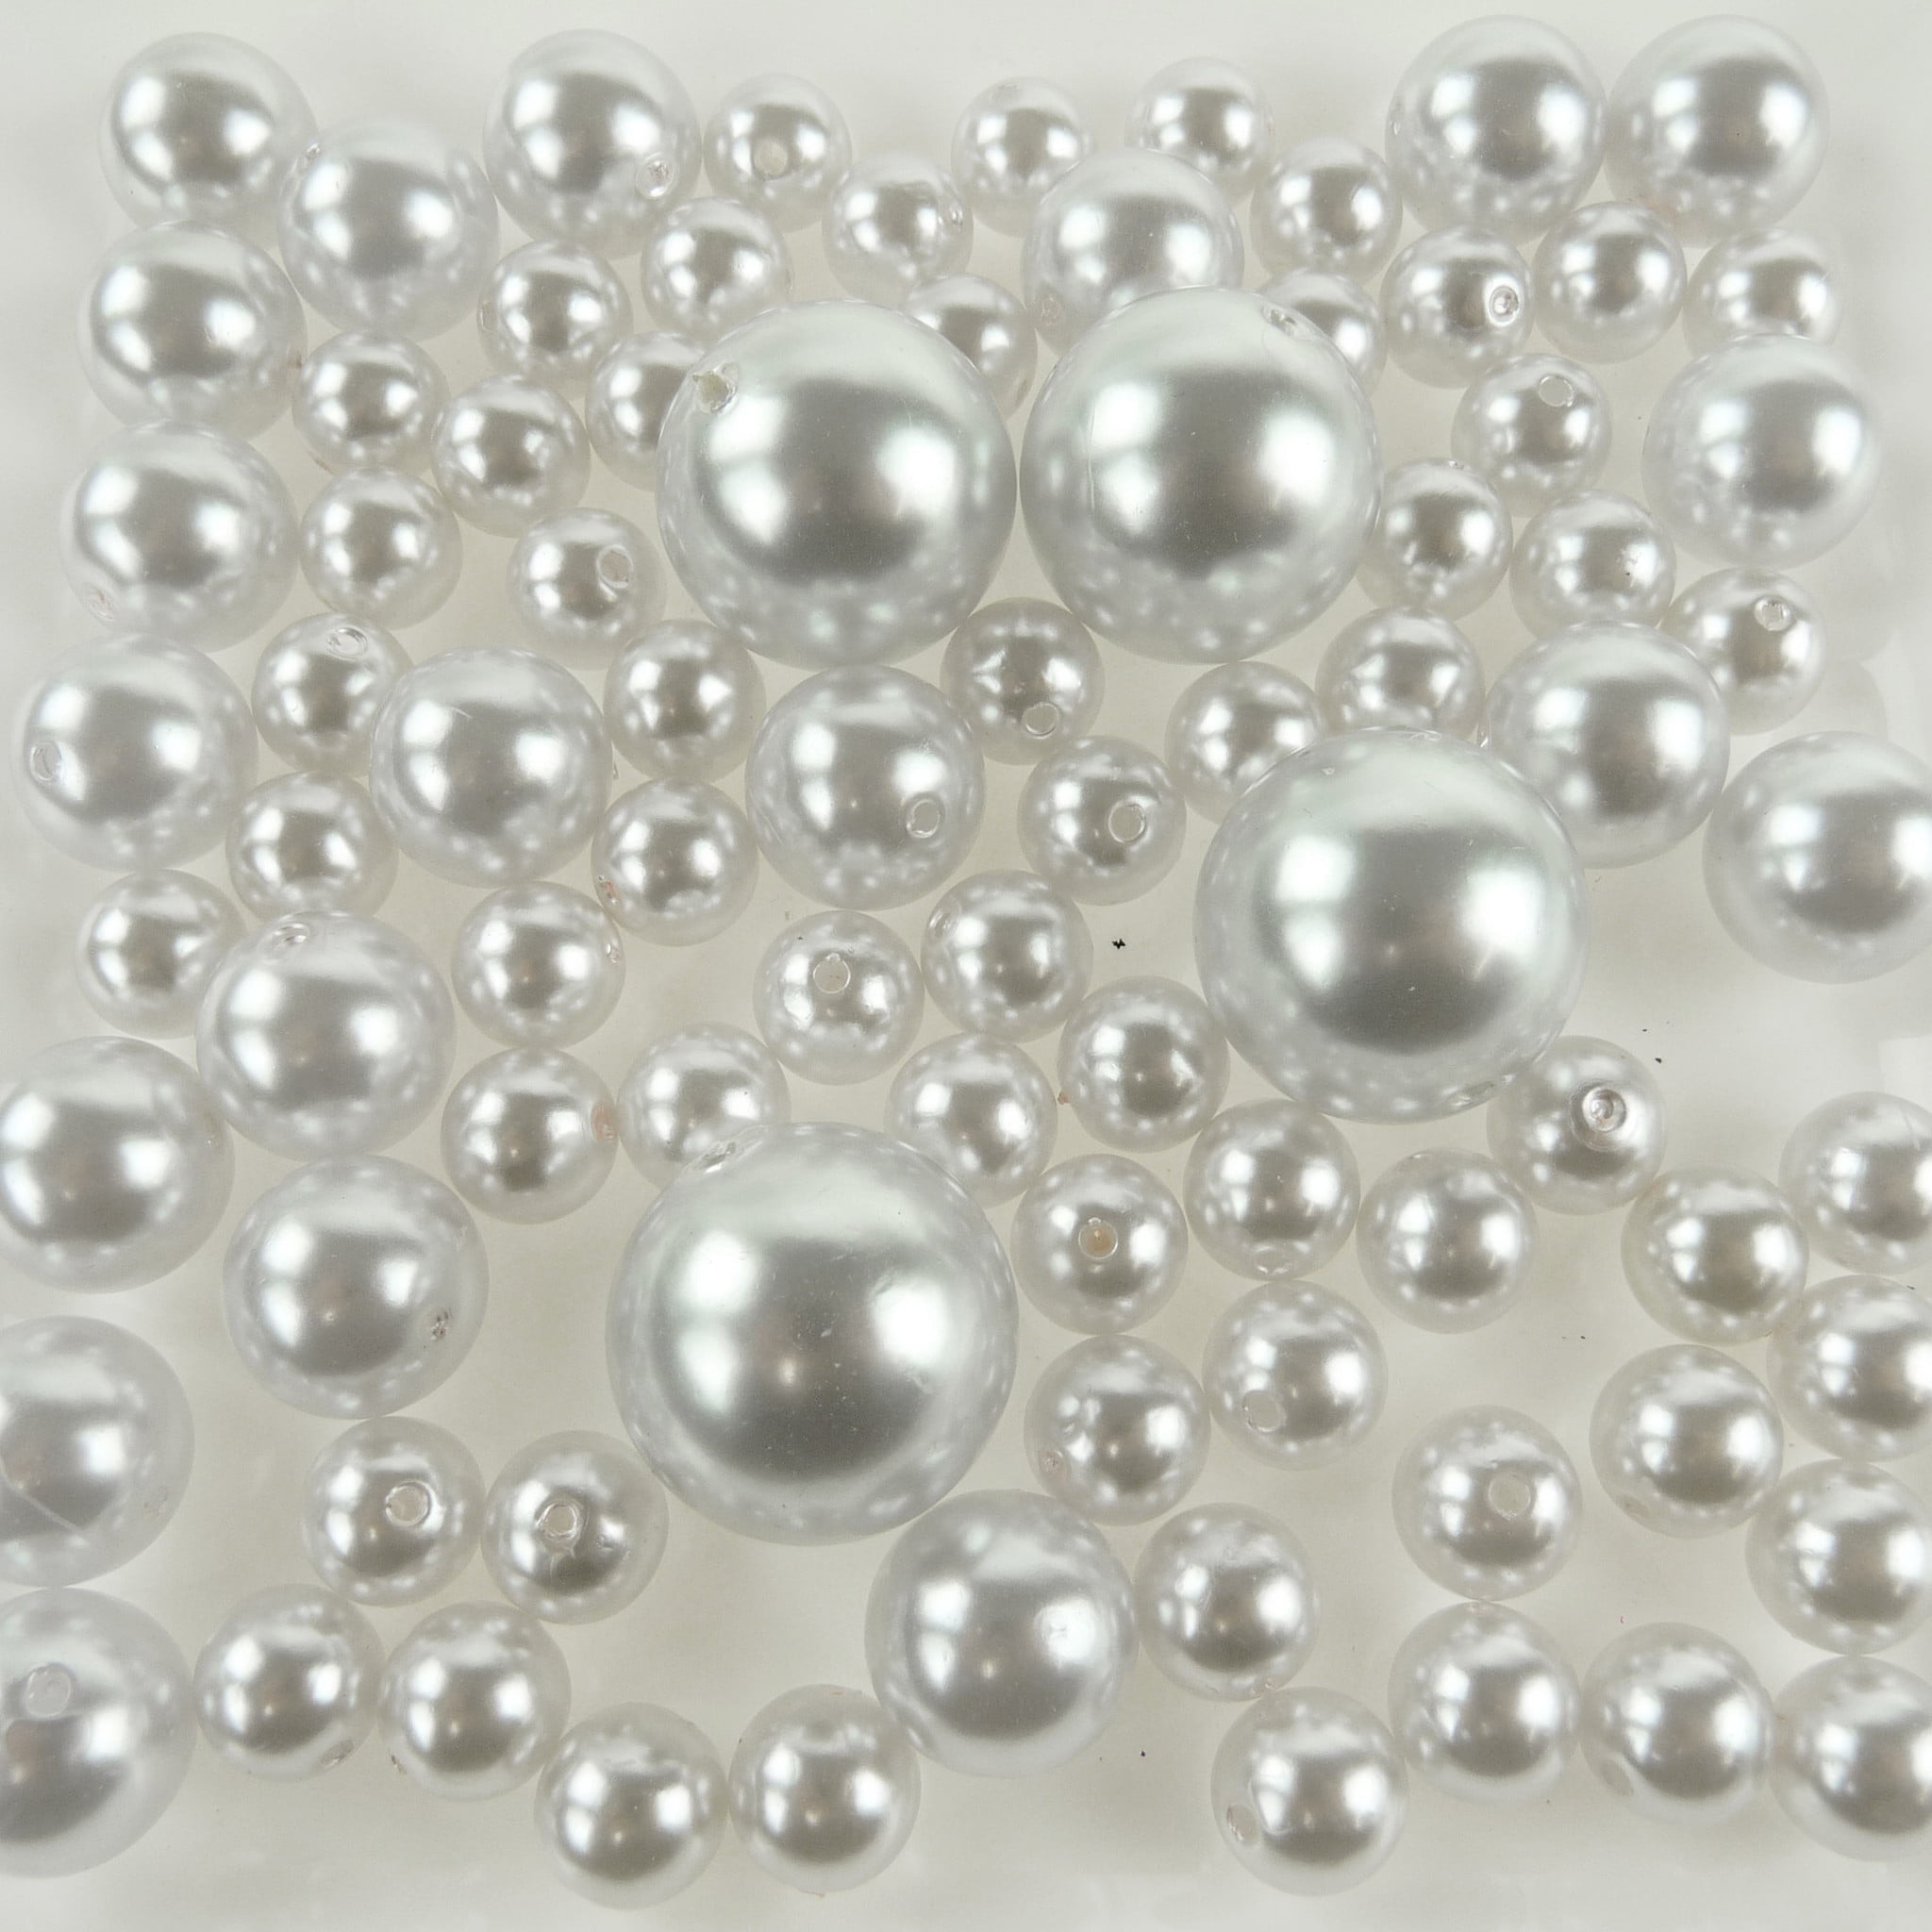 Vase Filler Pearls Beads Pebbles Wedding Decorative Centerpieces Plastic Balls 